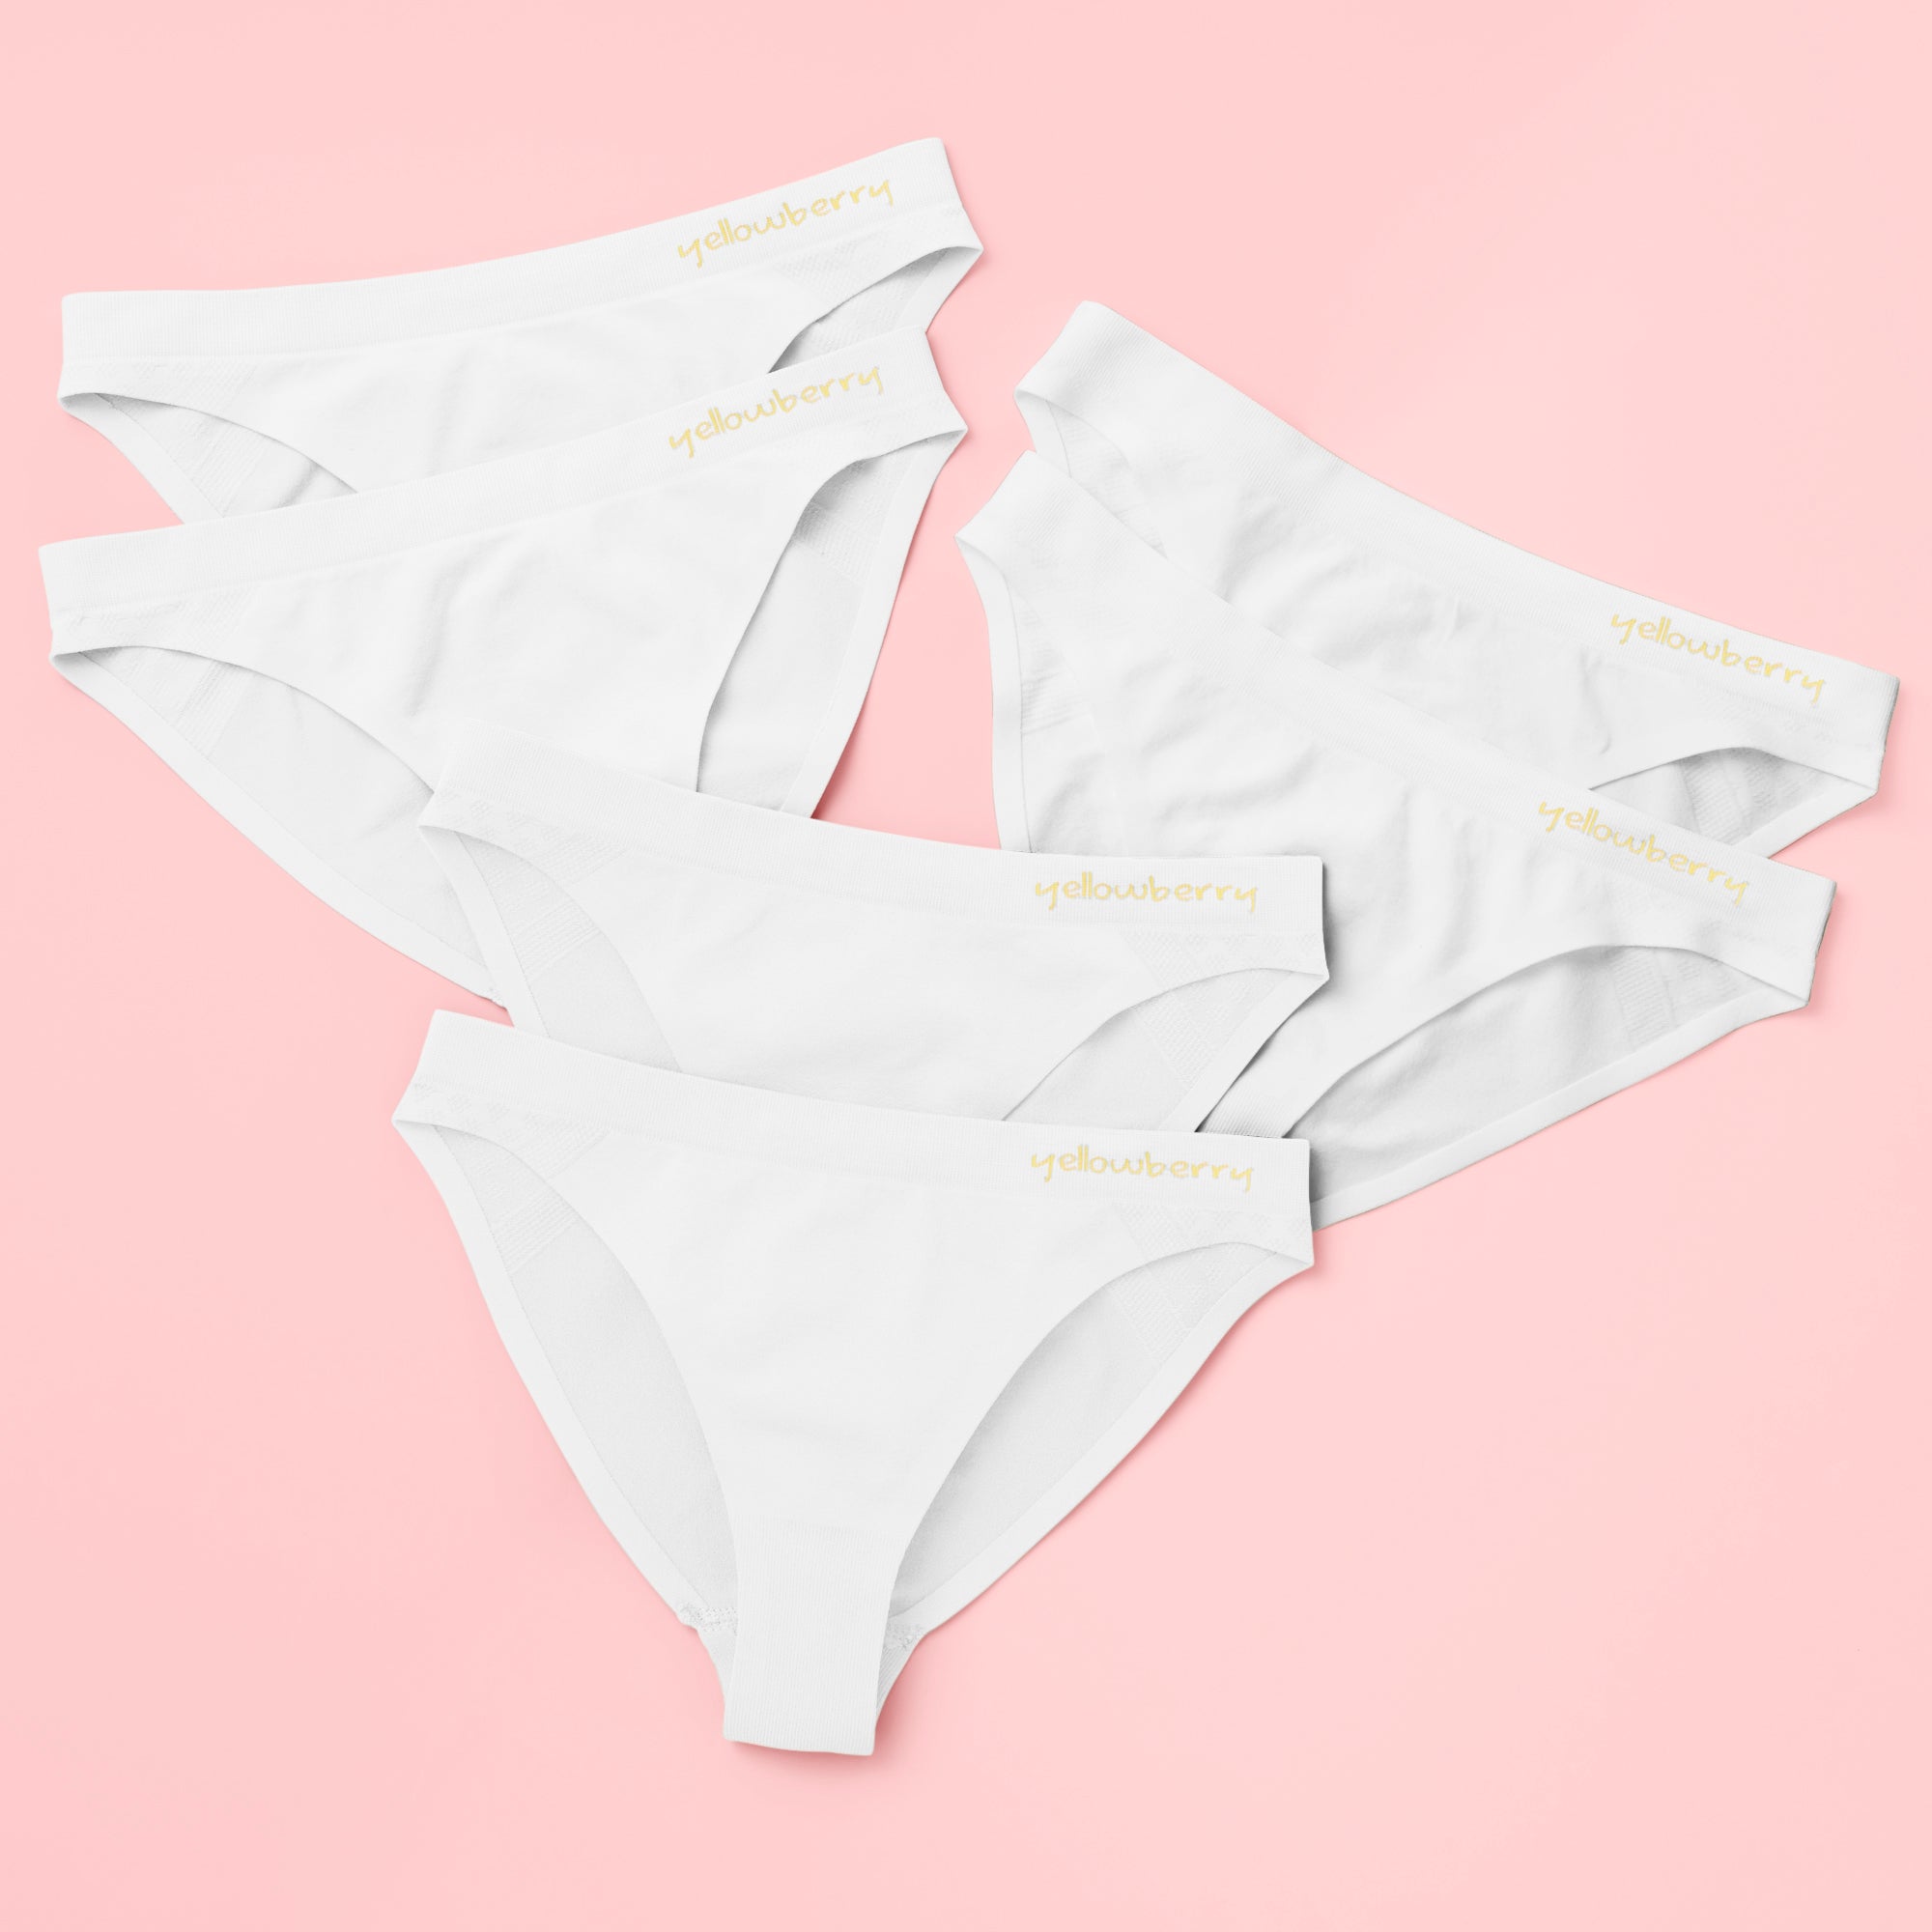 T front thong panties wholesale - Seamless Underwear